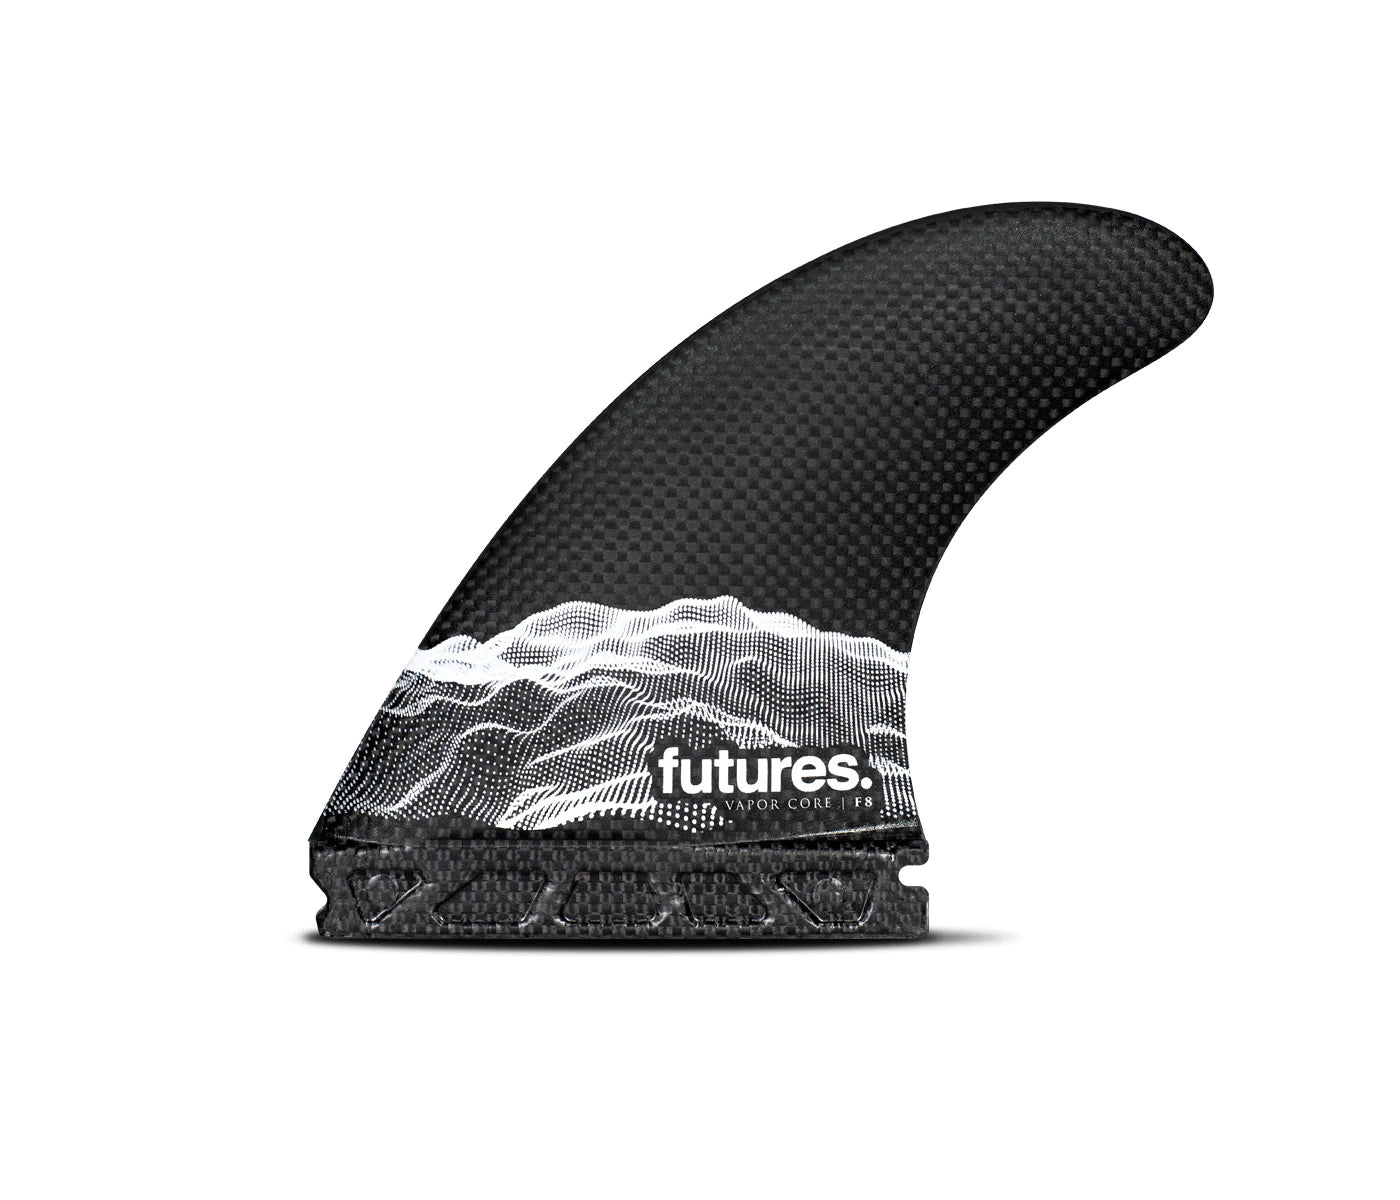 Futures F8 Vapor Core Surfboard Fins